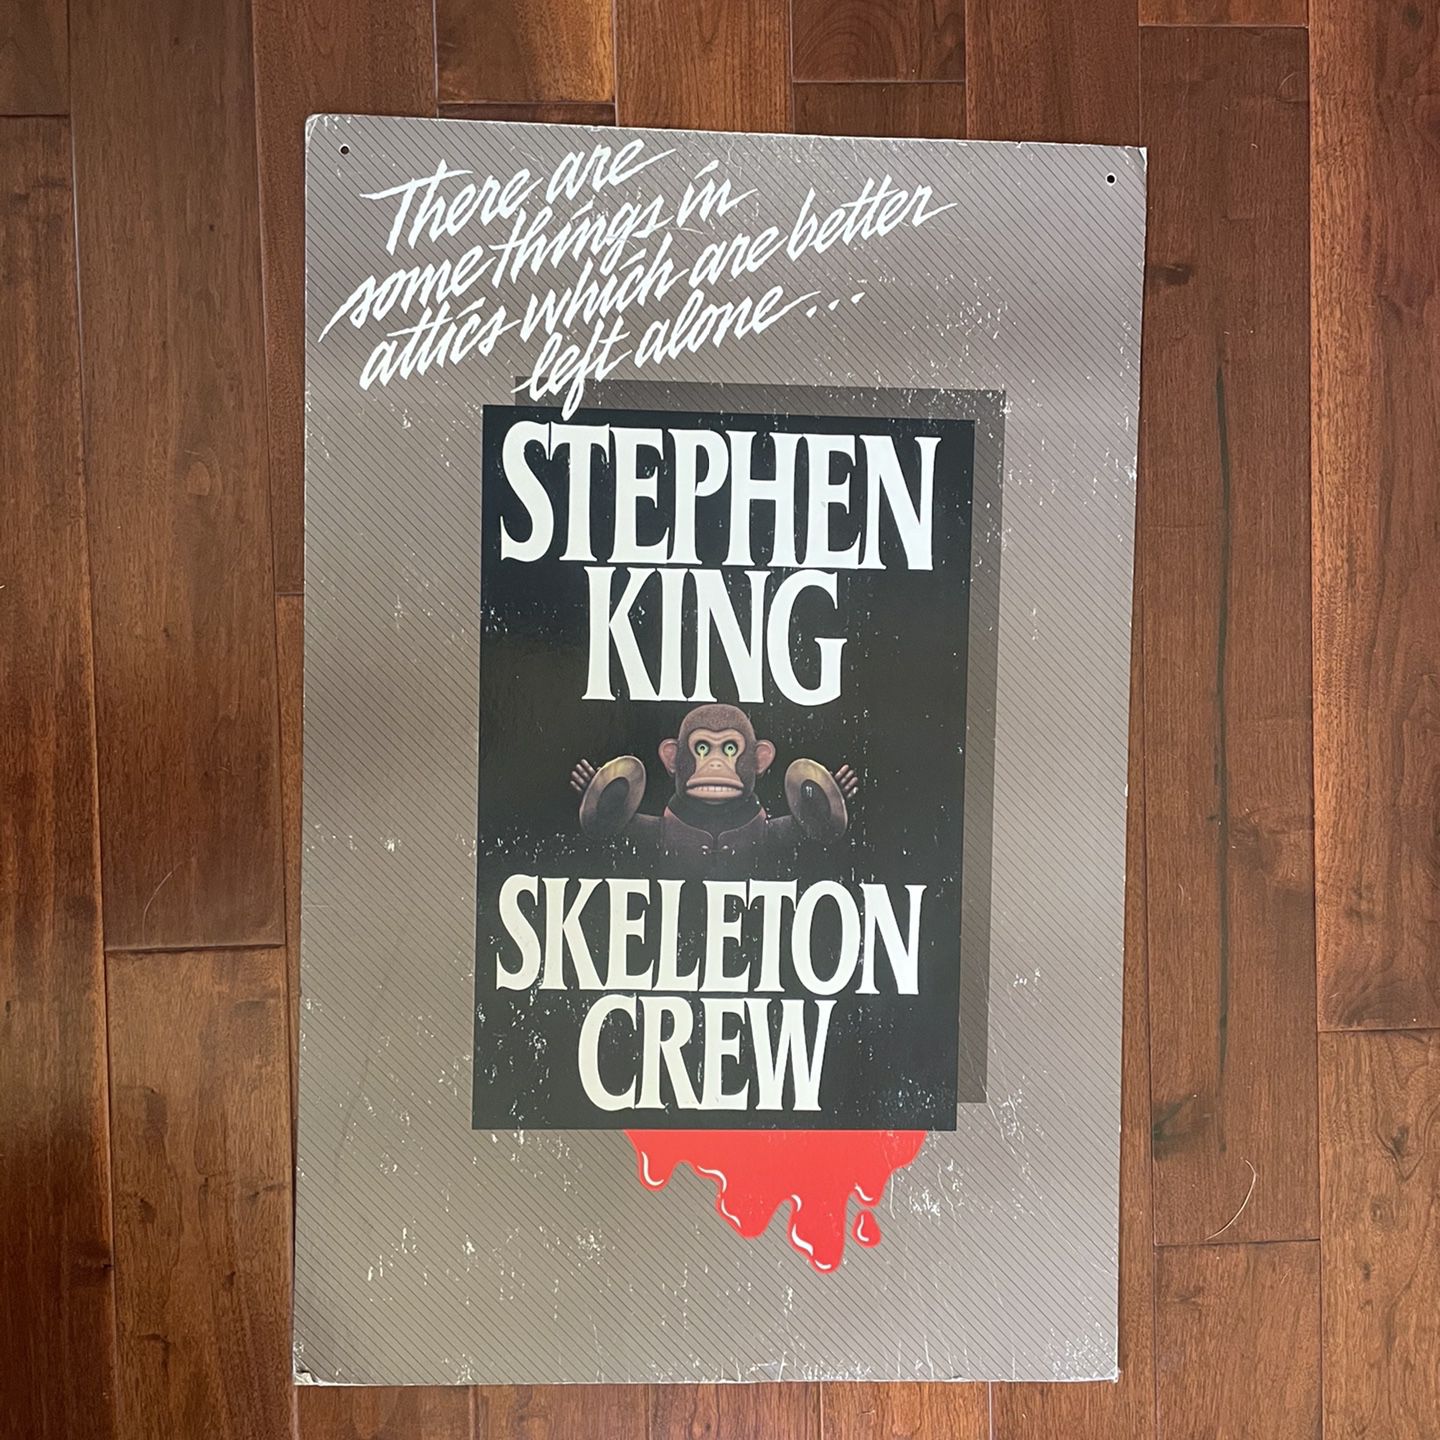 Skeleton Crew Advertising Poster Promoting Book By Stephen King